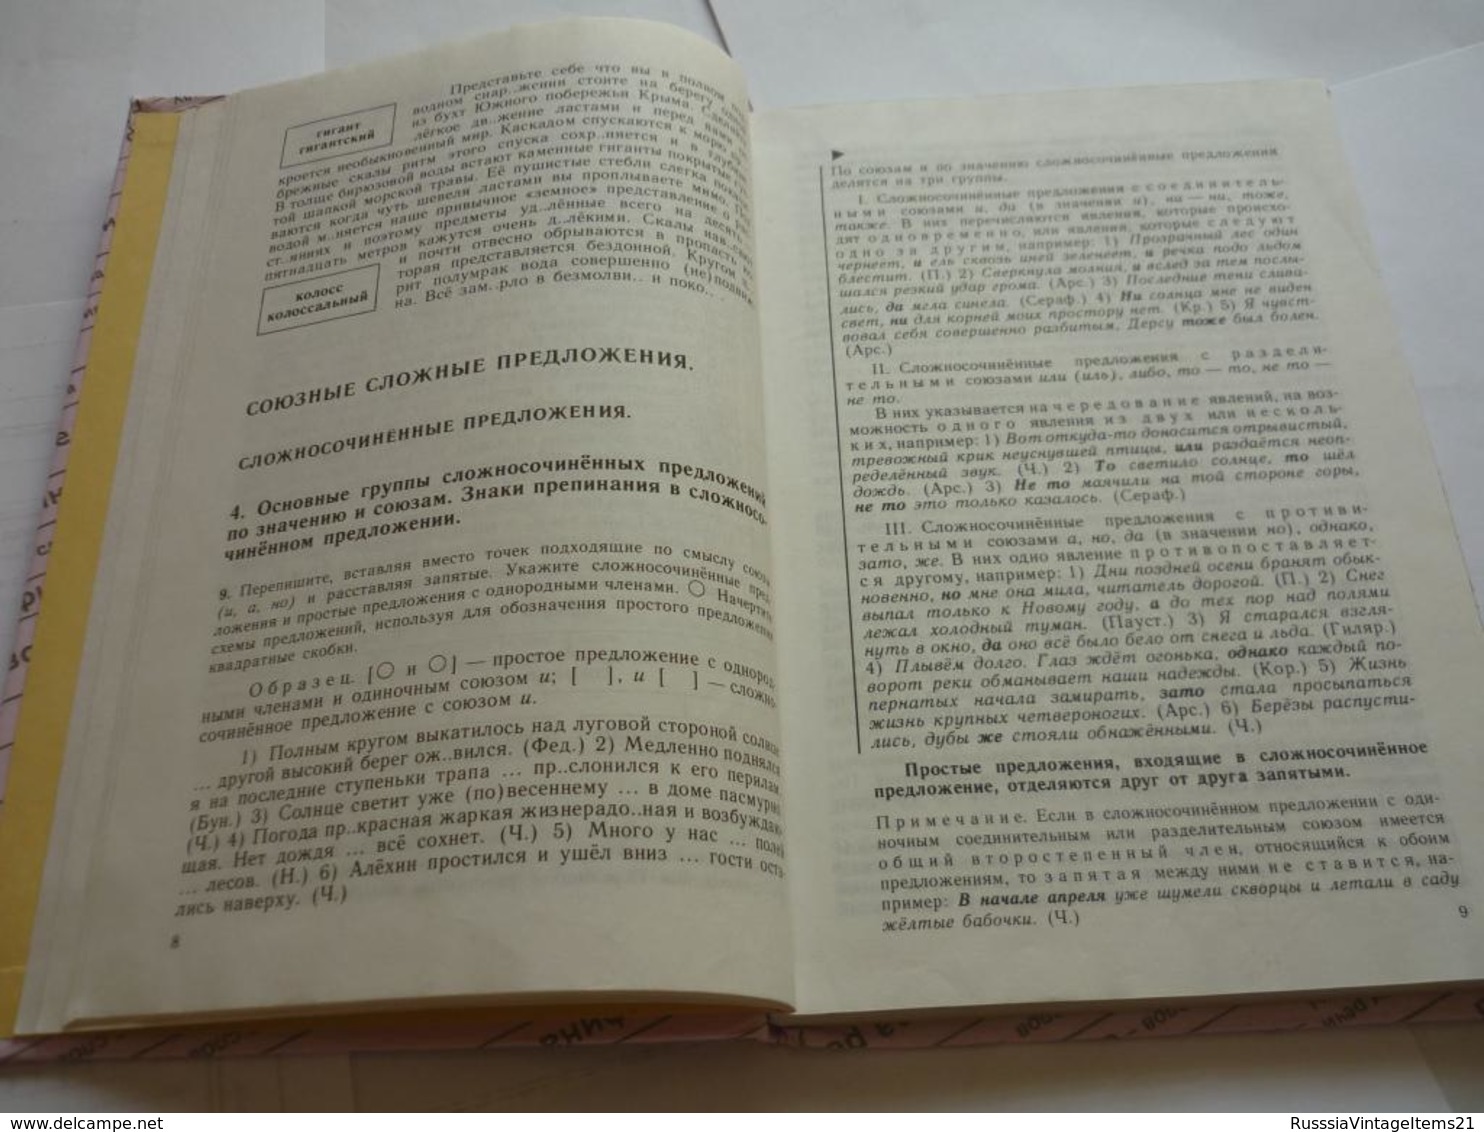 Russian textbook - in Russian - Barkhudarov S. Kryuchkov S .; Maksimov L. - Russian language - Textbook for grade 9.